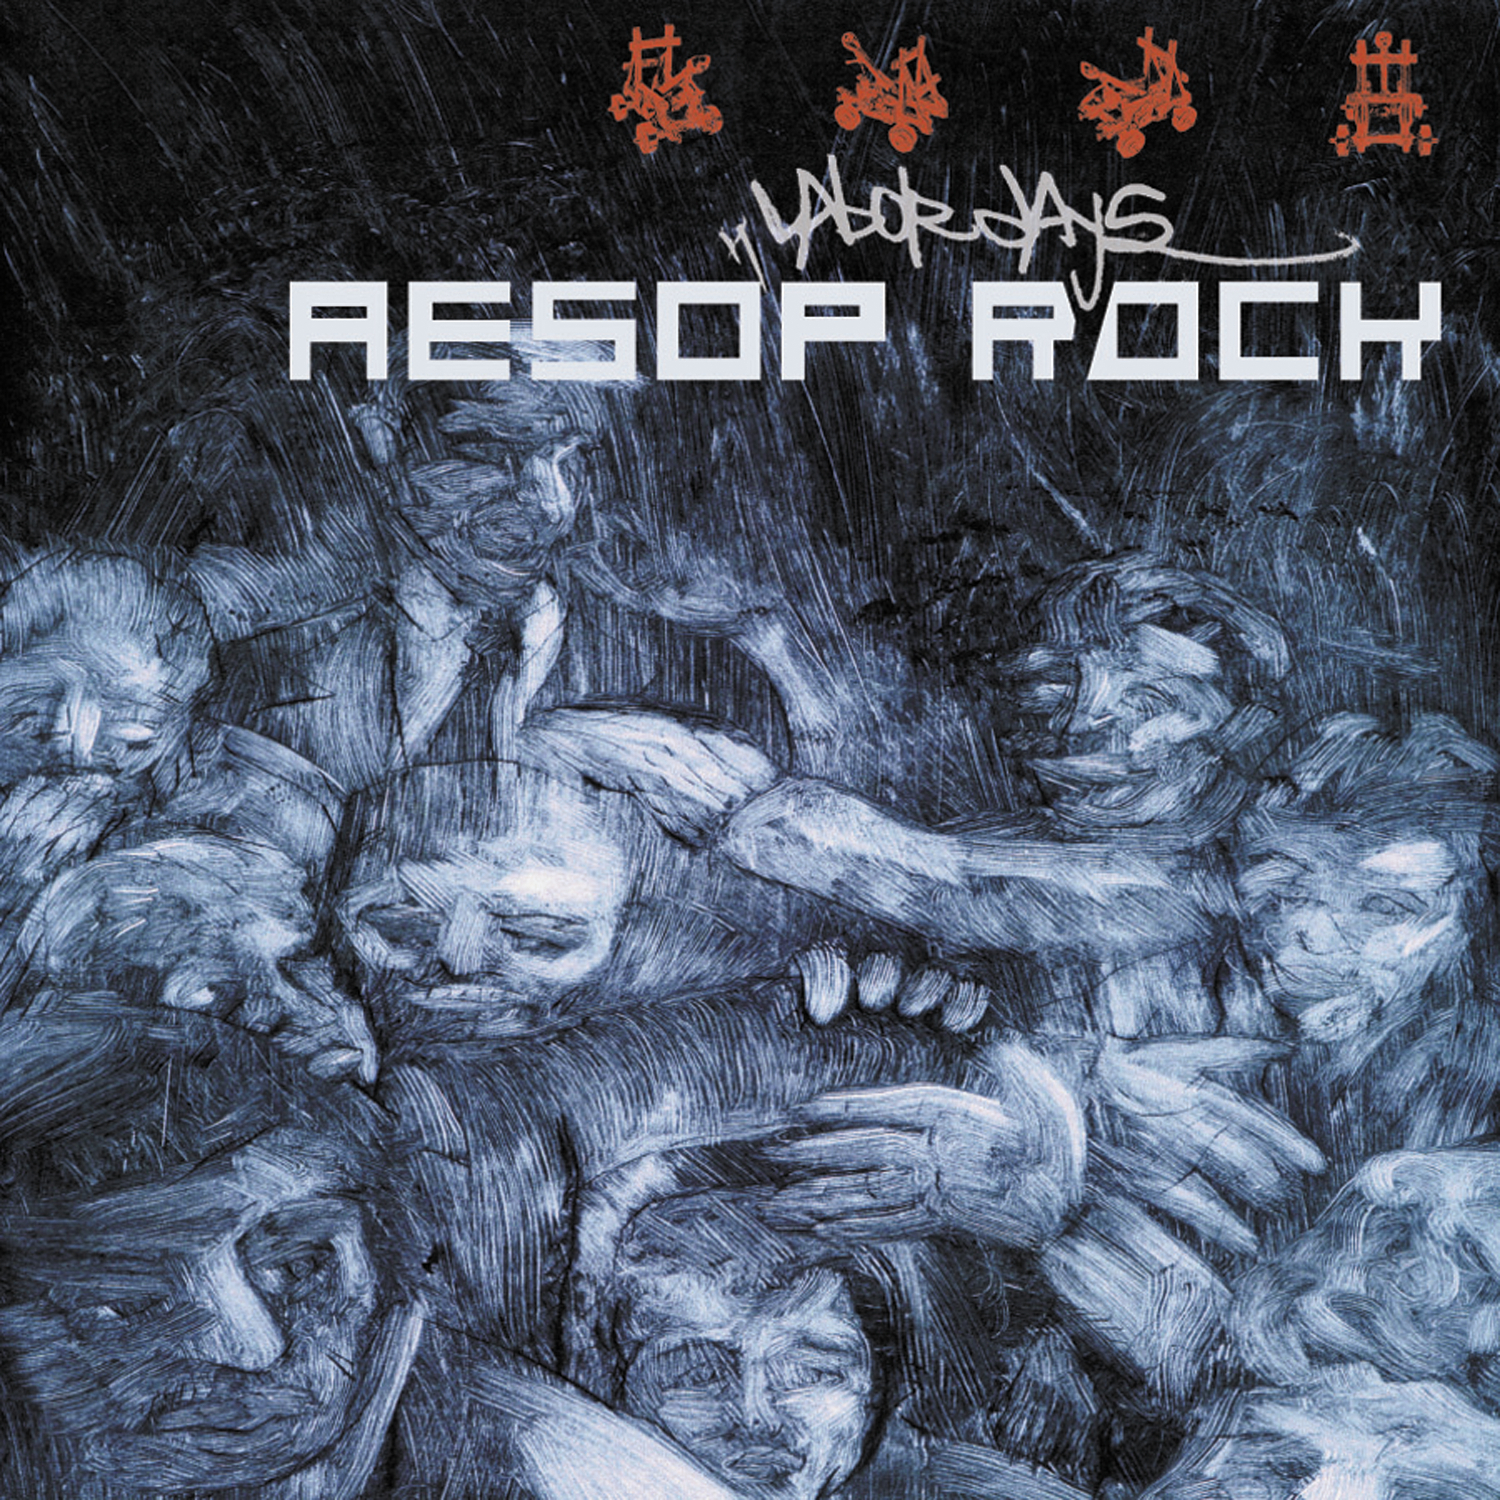 Aesop Rock - Labor Days 20th anniversary LP (Met